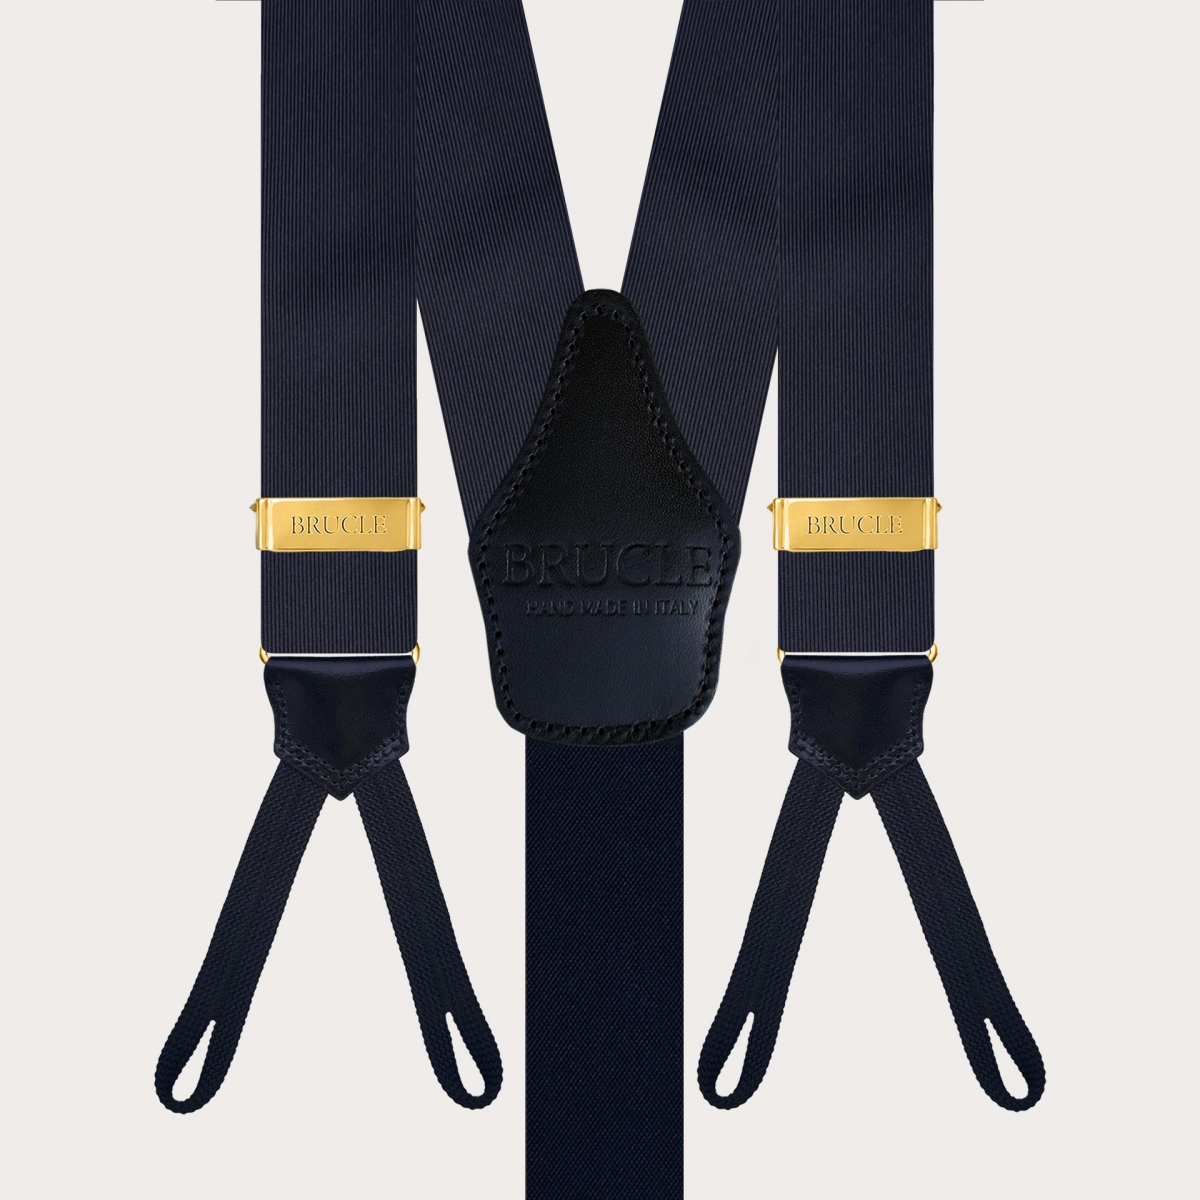 Tirantes de seda azul marino para botones con asas y reguladores dorados